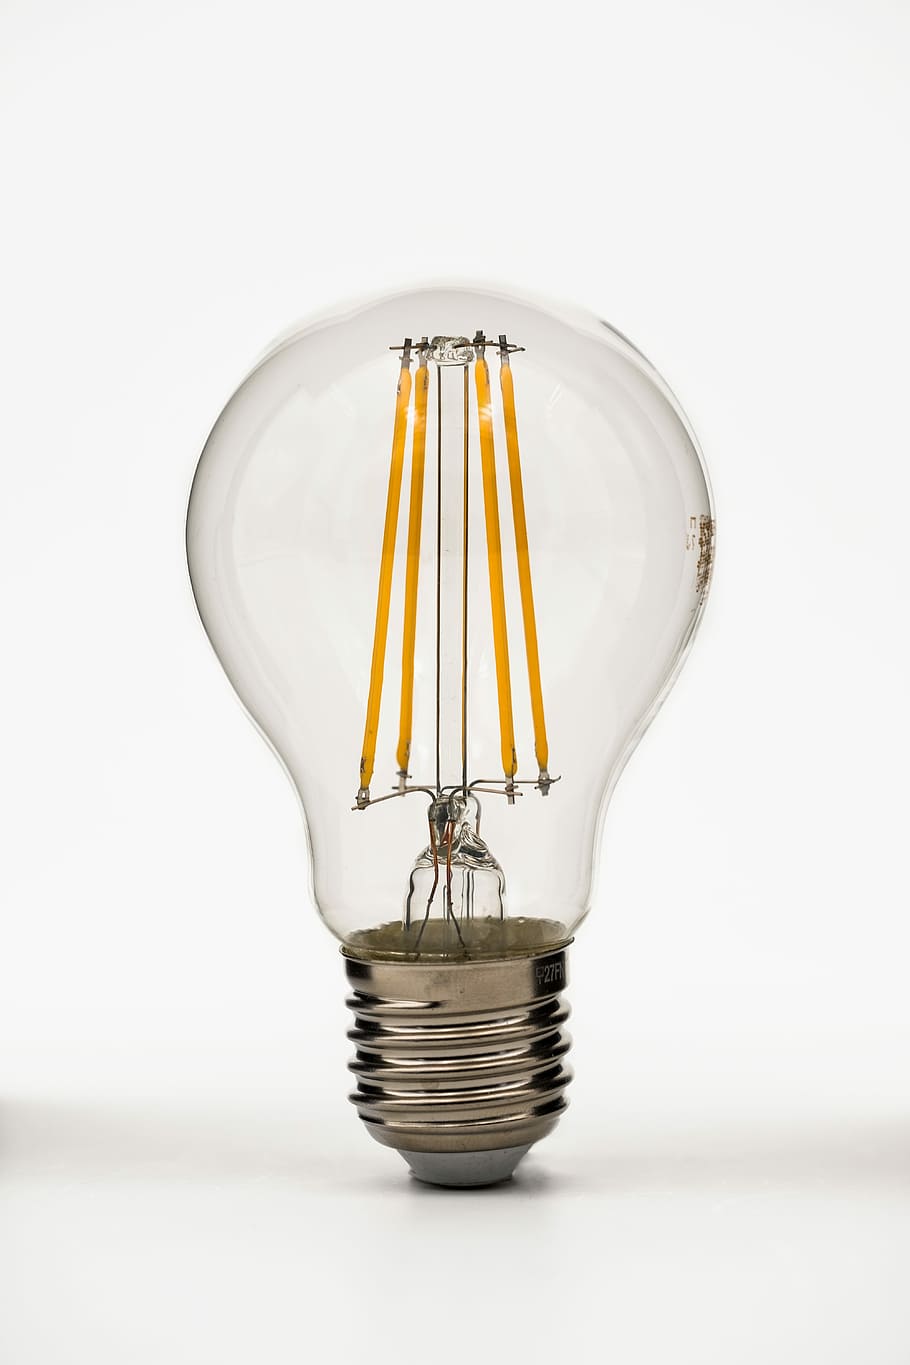 lâmpadas, lâmpada, sparlampe, energiesparlampe, salvar, econômico, meio ambiente, ambientalmente amigável, led, luz